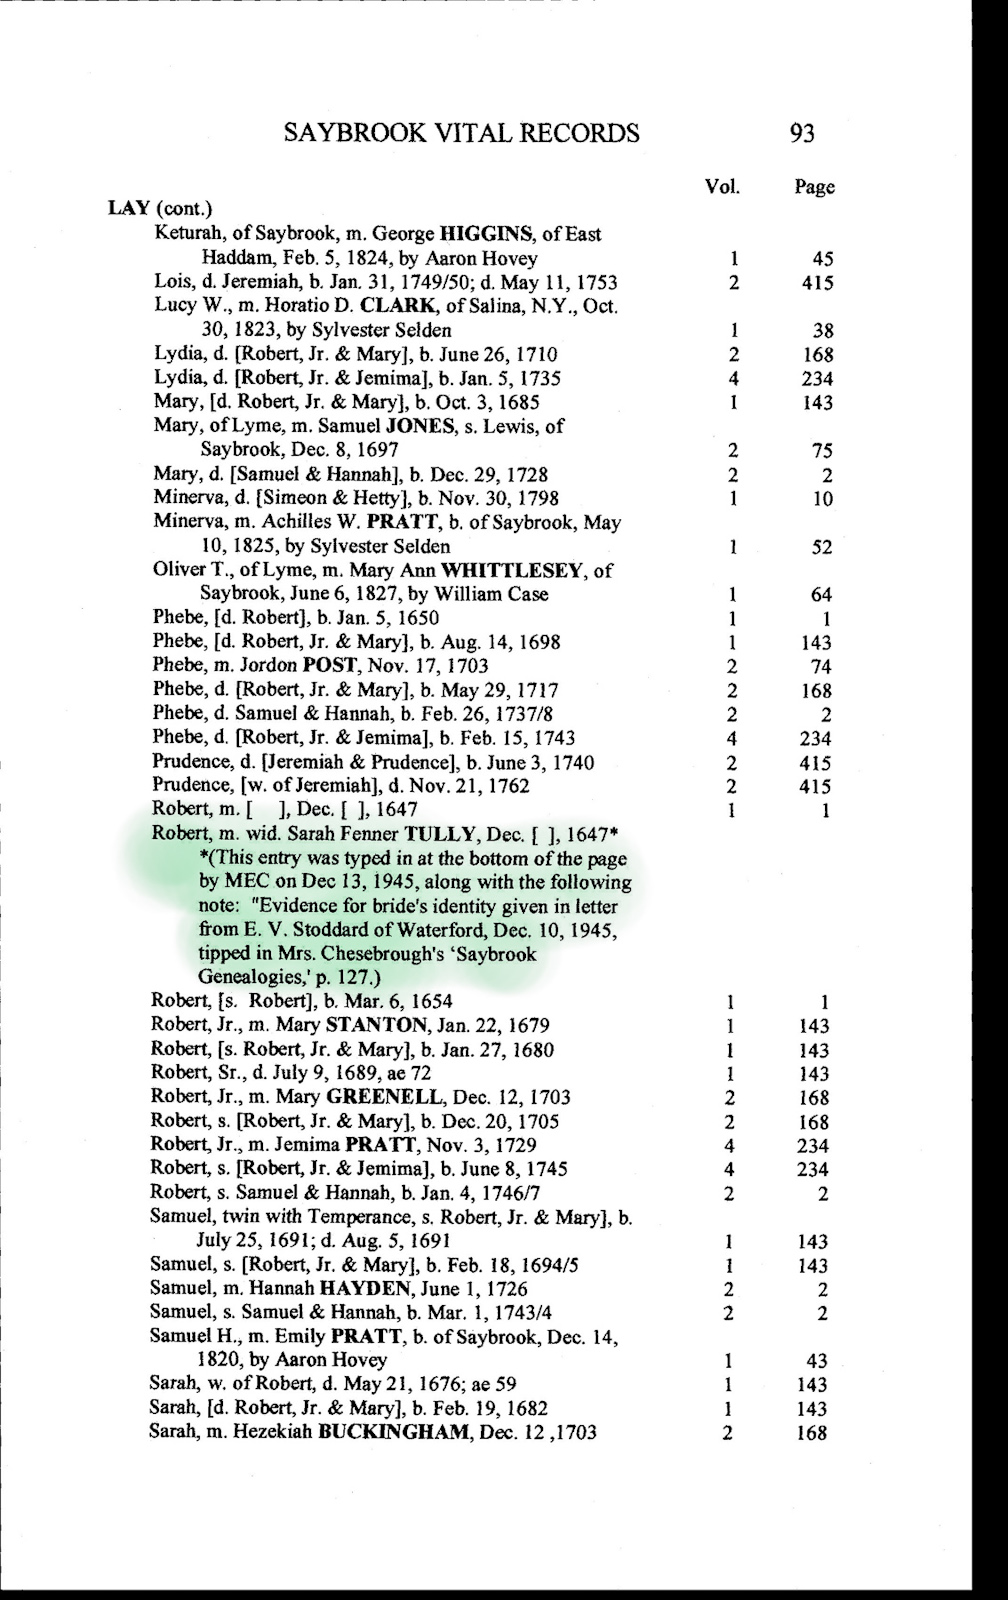 Info - Connecticut Town Death Records, pre-1870 (Barbour Collection)